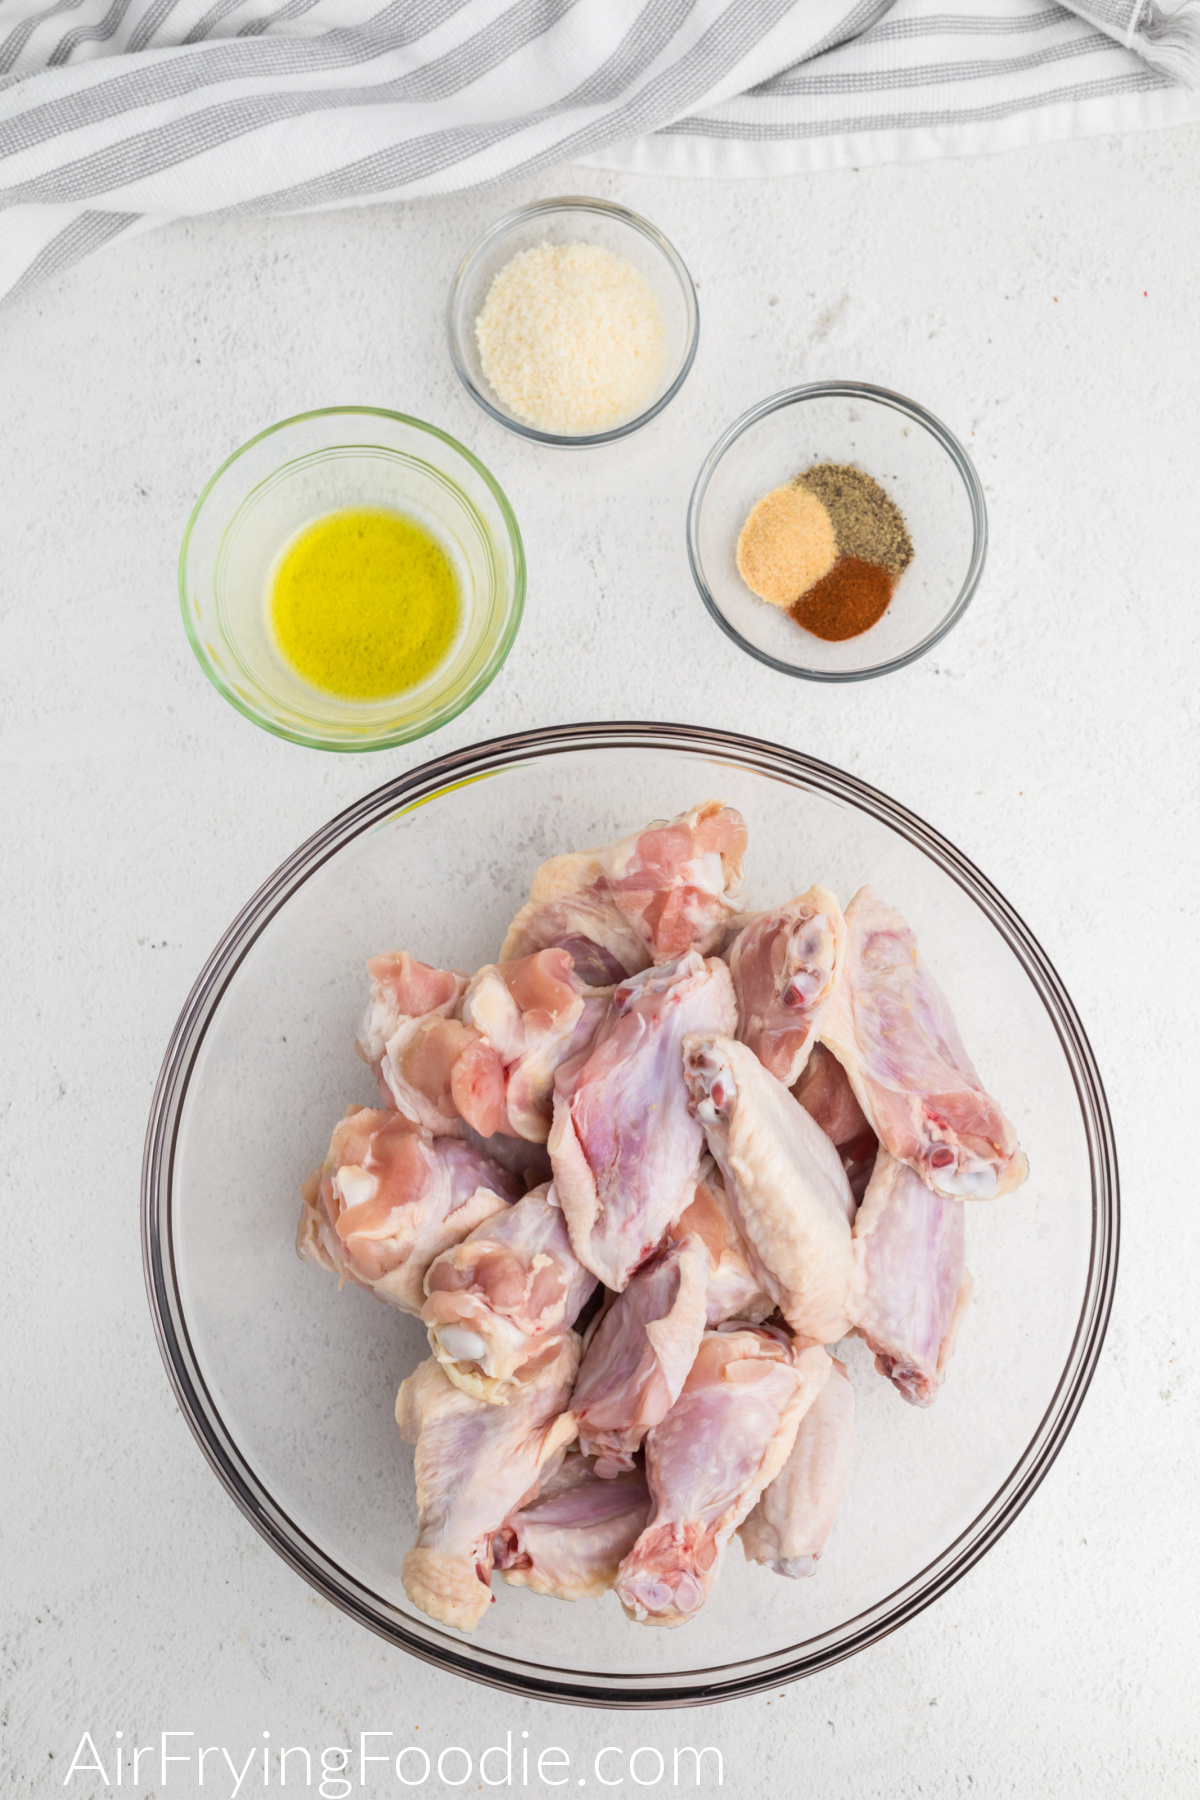 Ingredients needed to make garlic parmesan chicken wings in the air fryer. 